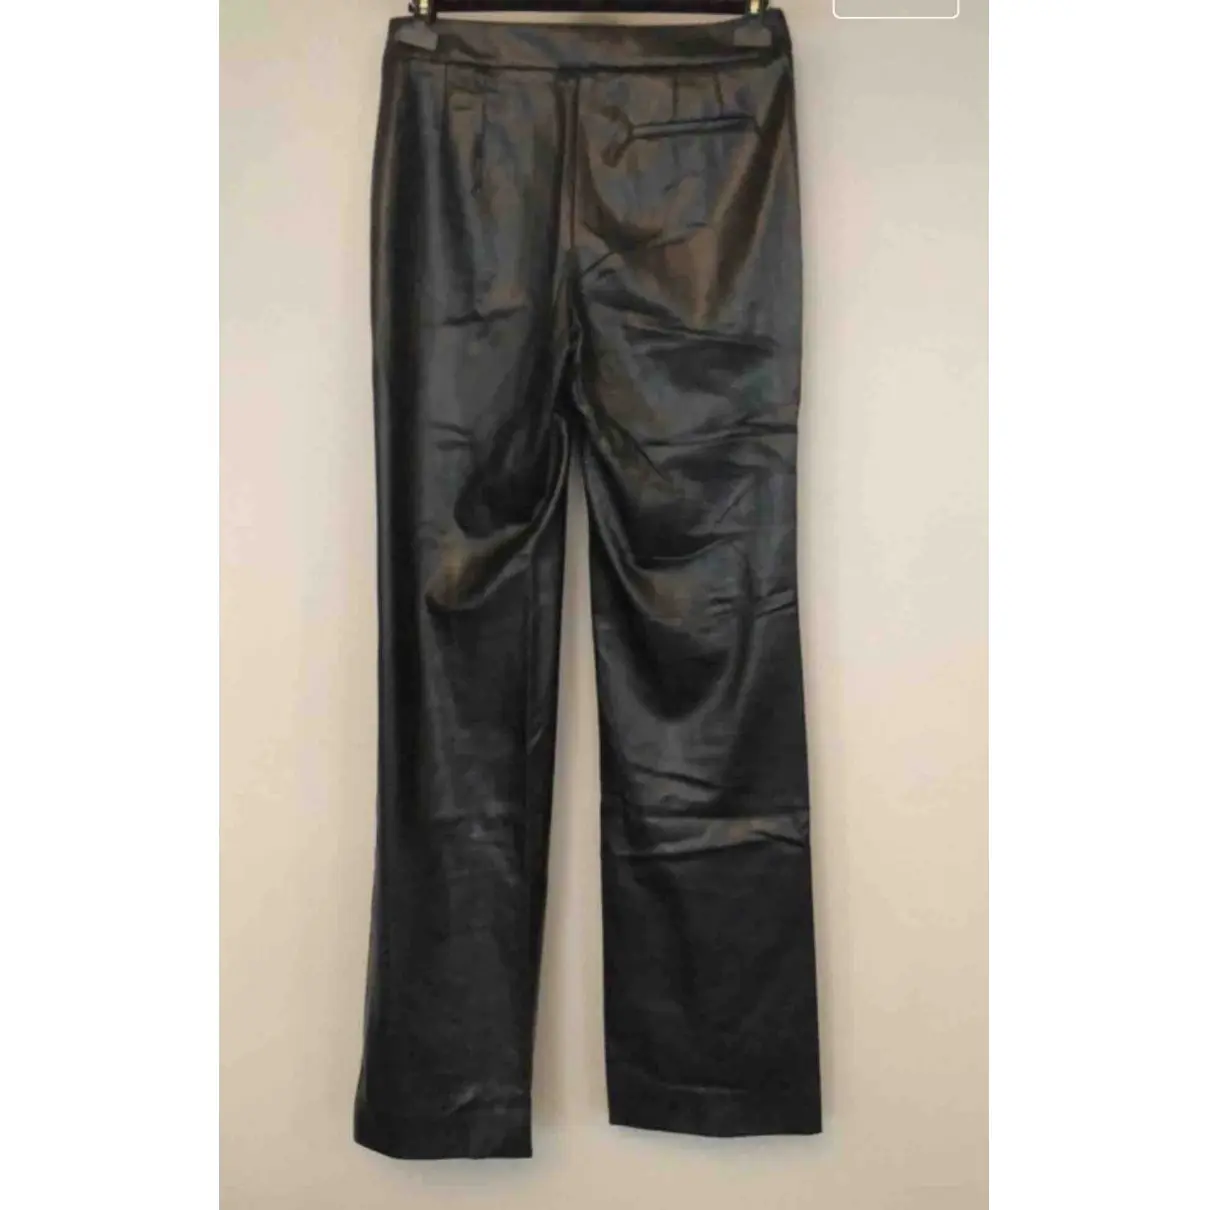 Buy Sonia Rykiel Leather straight pants online